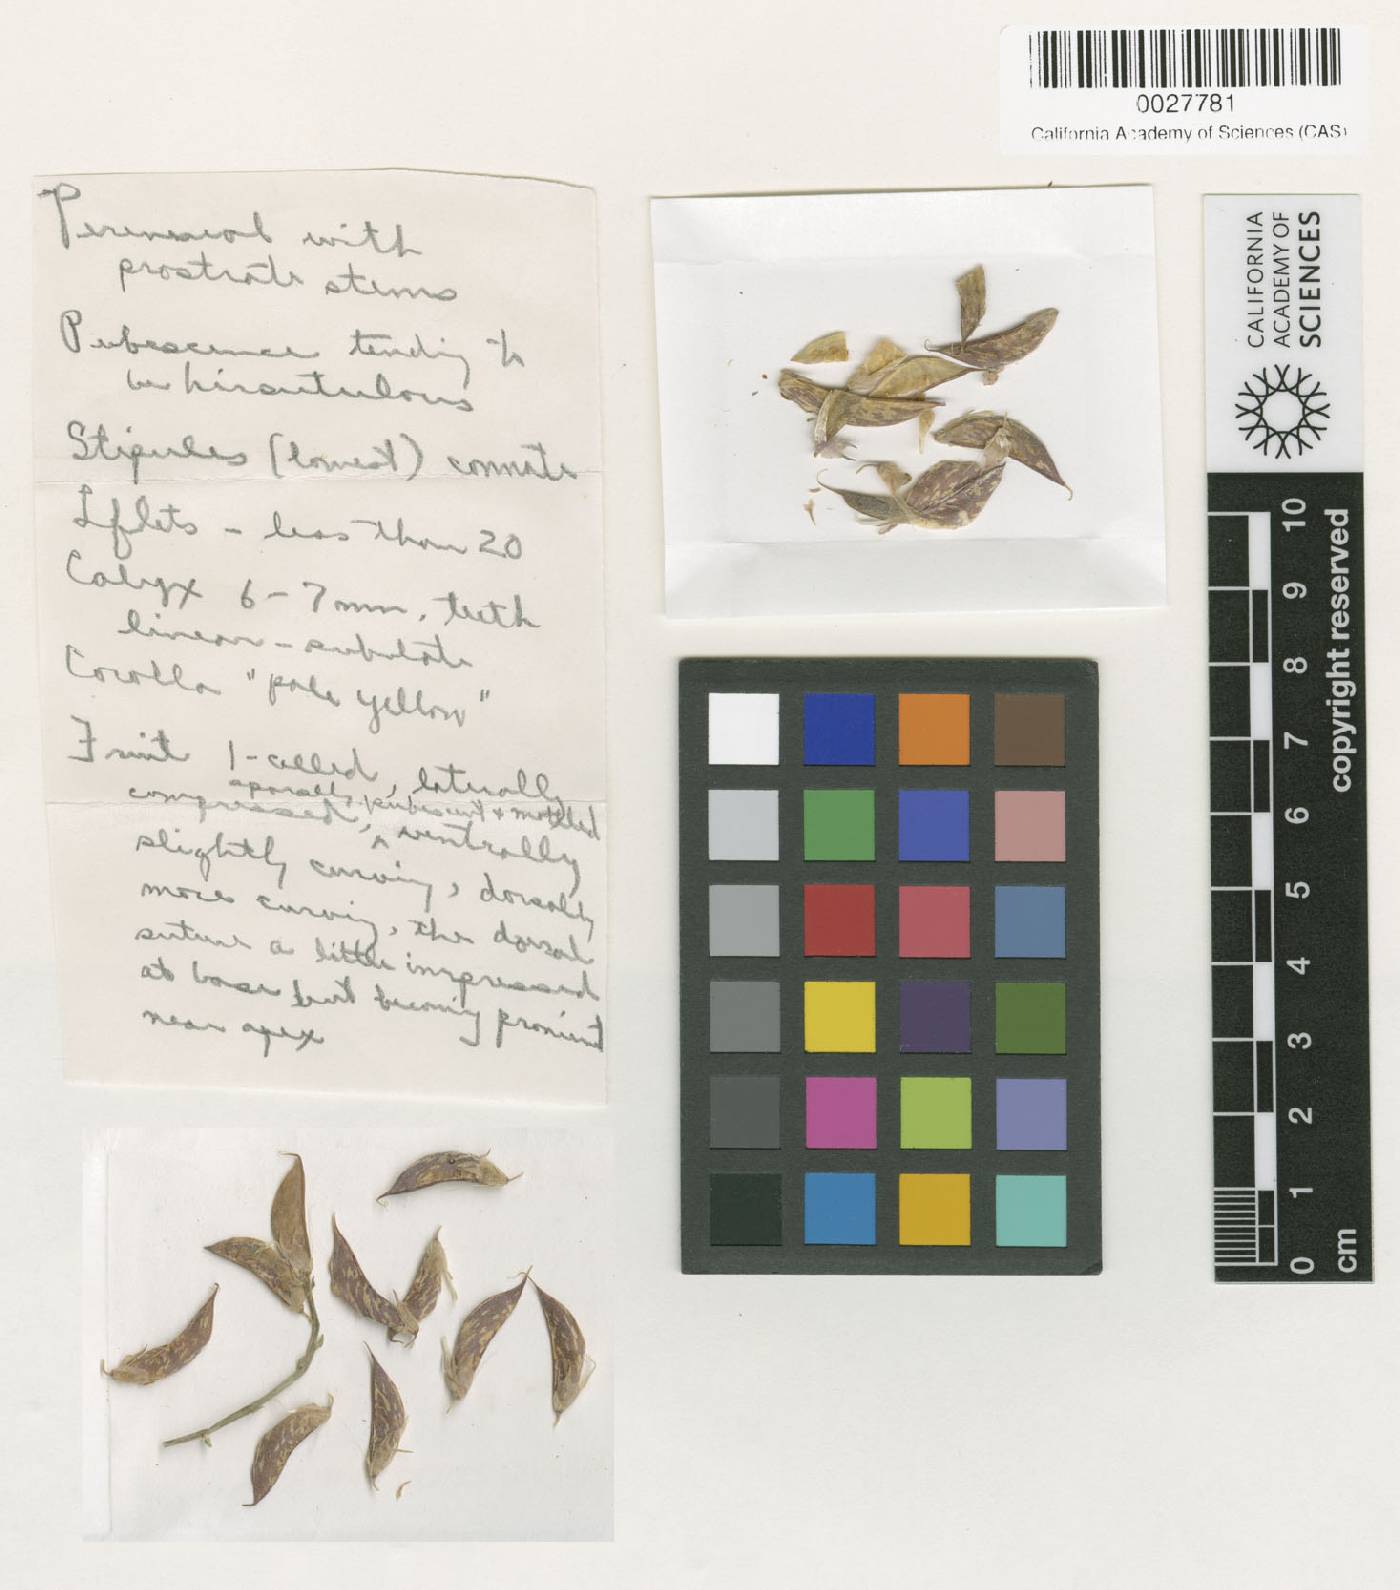 Astragalus shevockii image